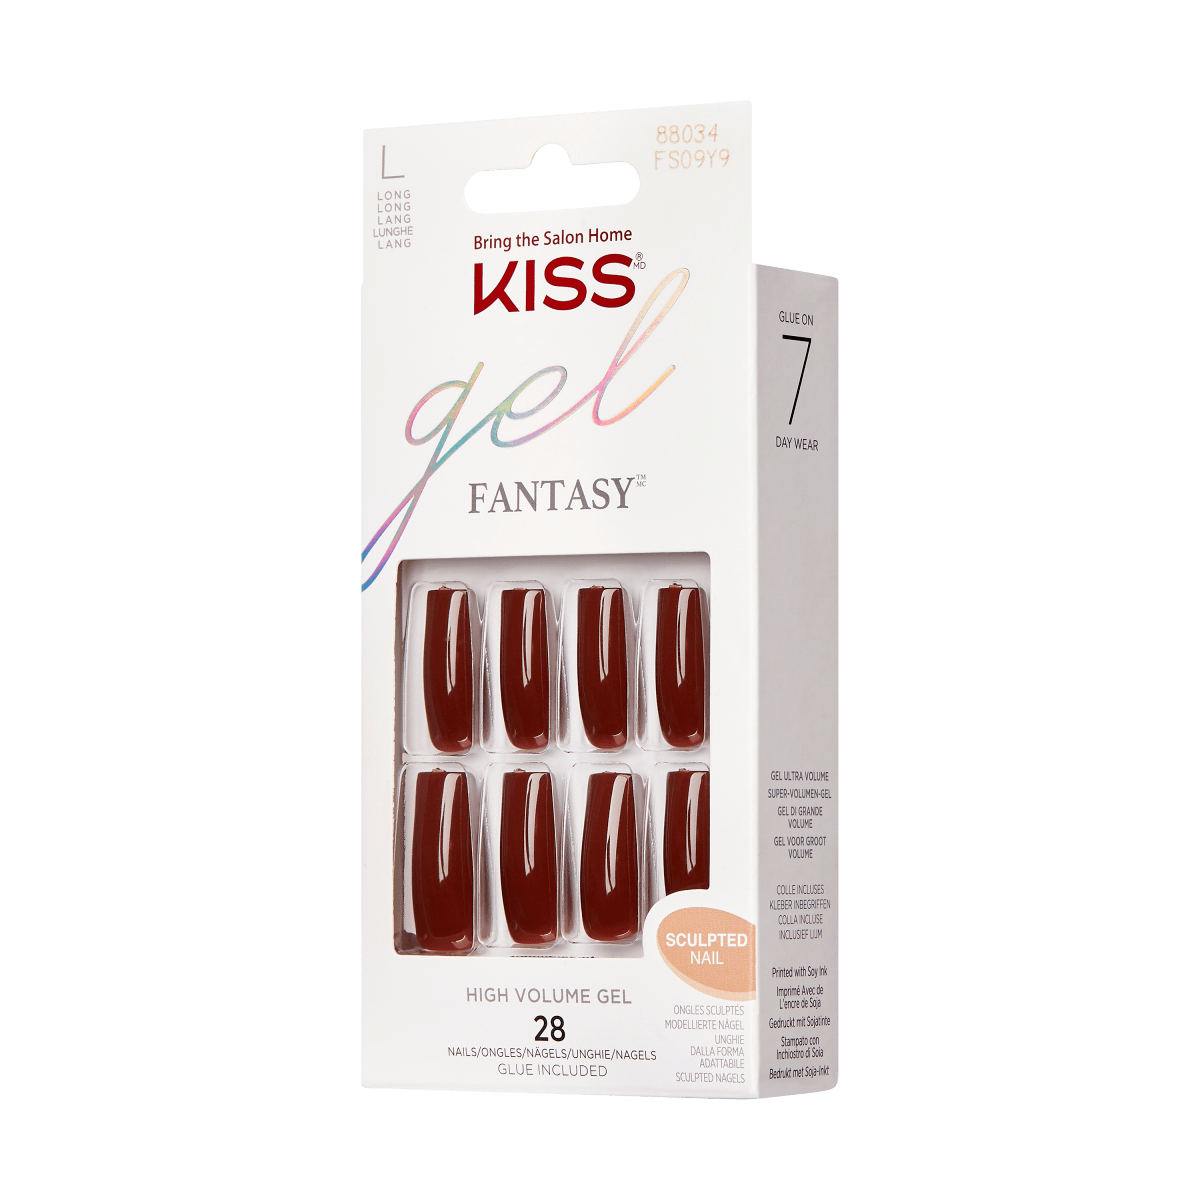 KISS Gel Fantasy Sculpted Nails -  Black Cherry